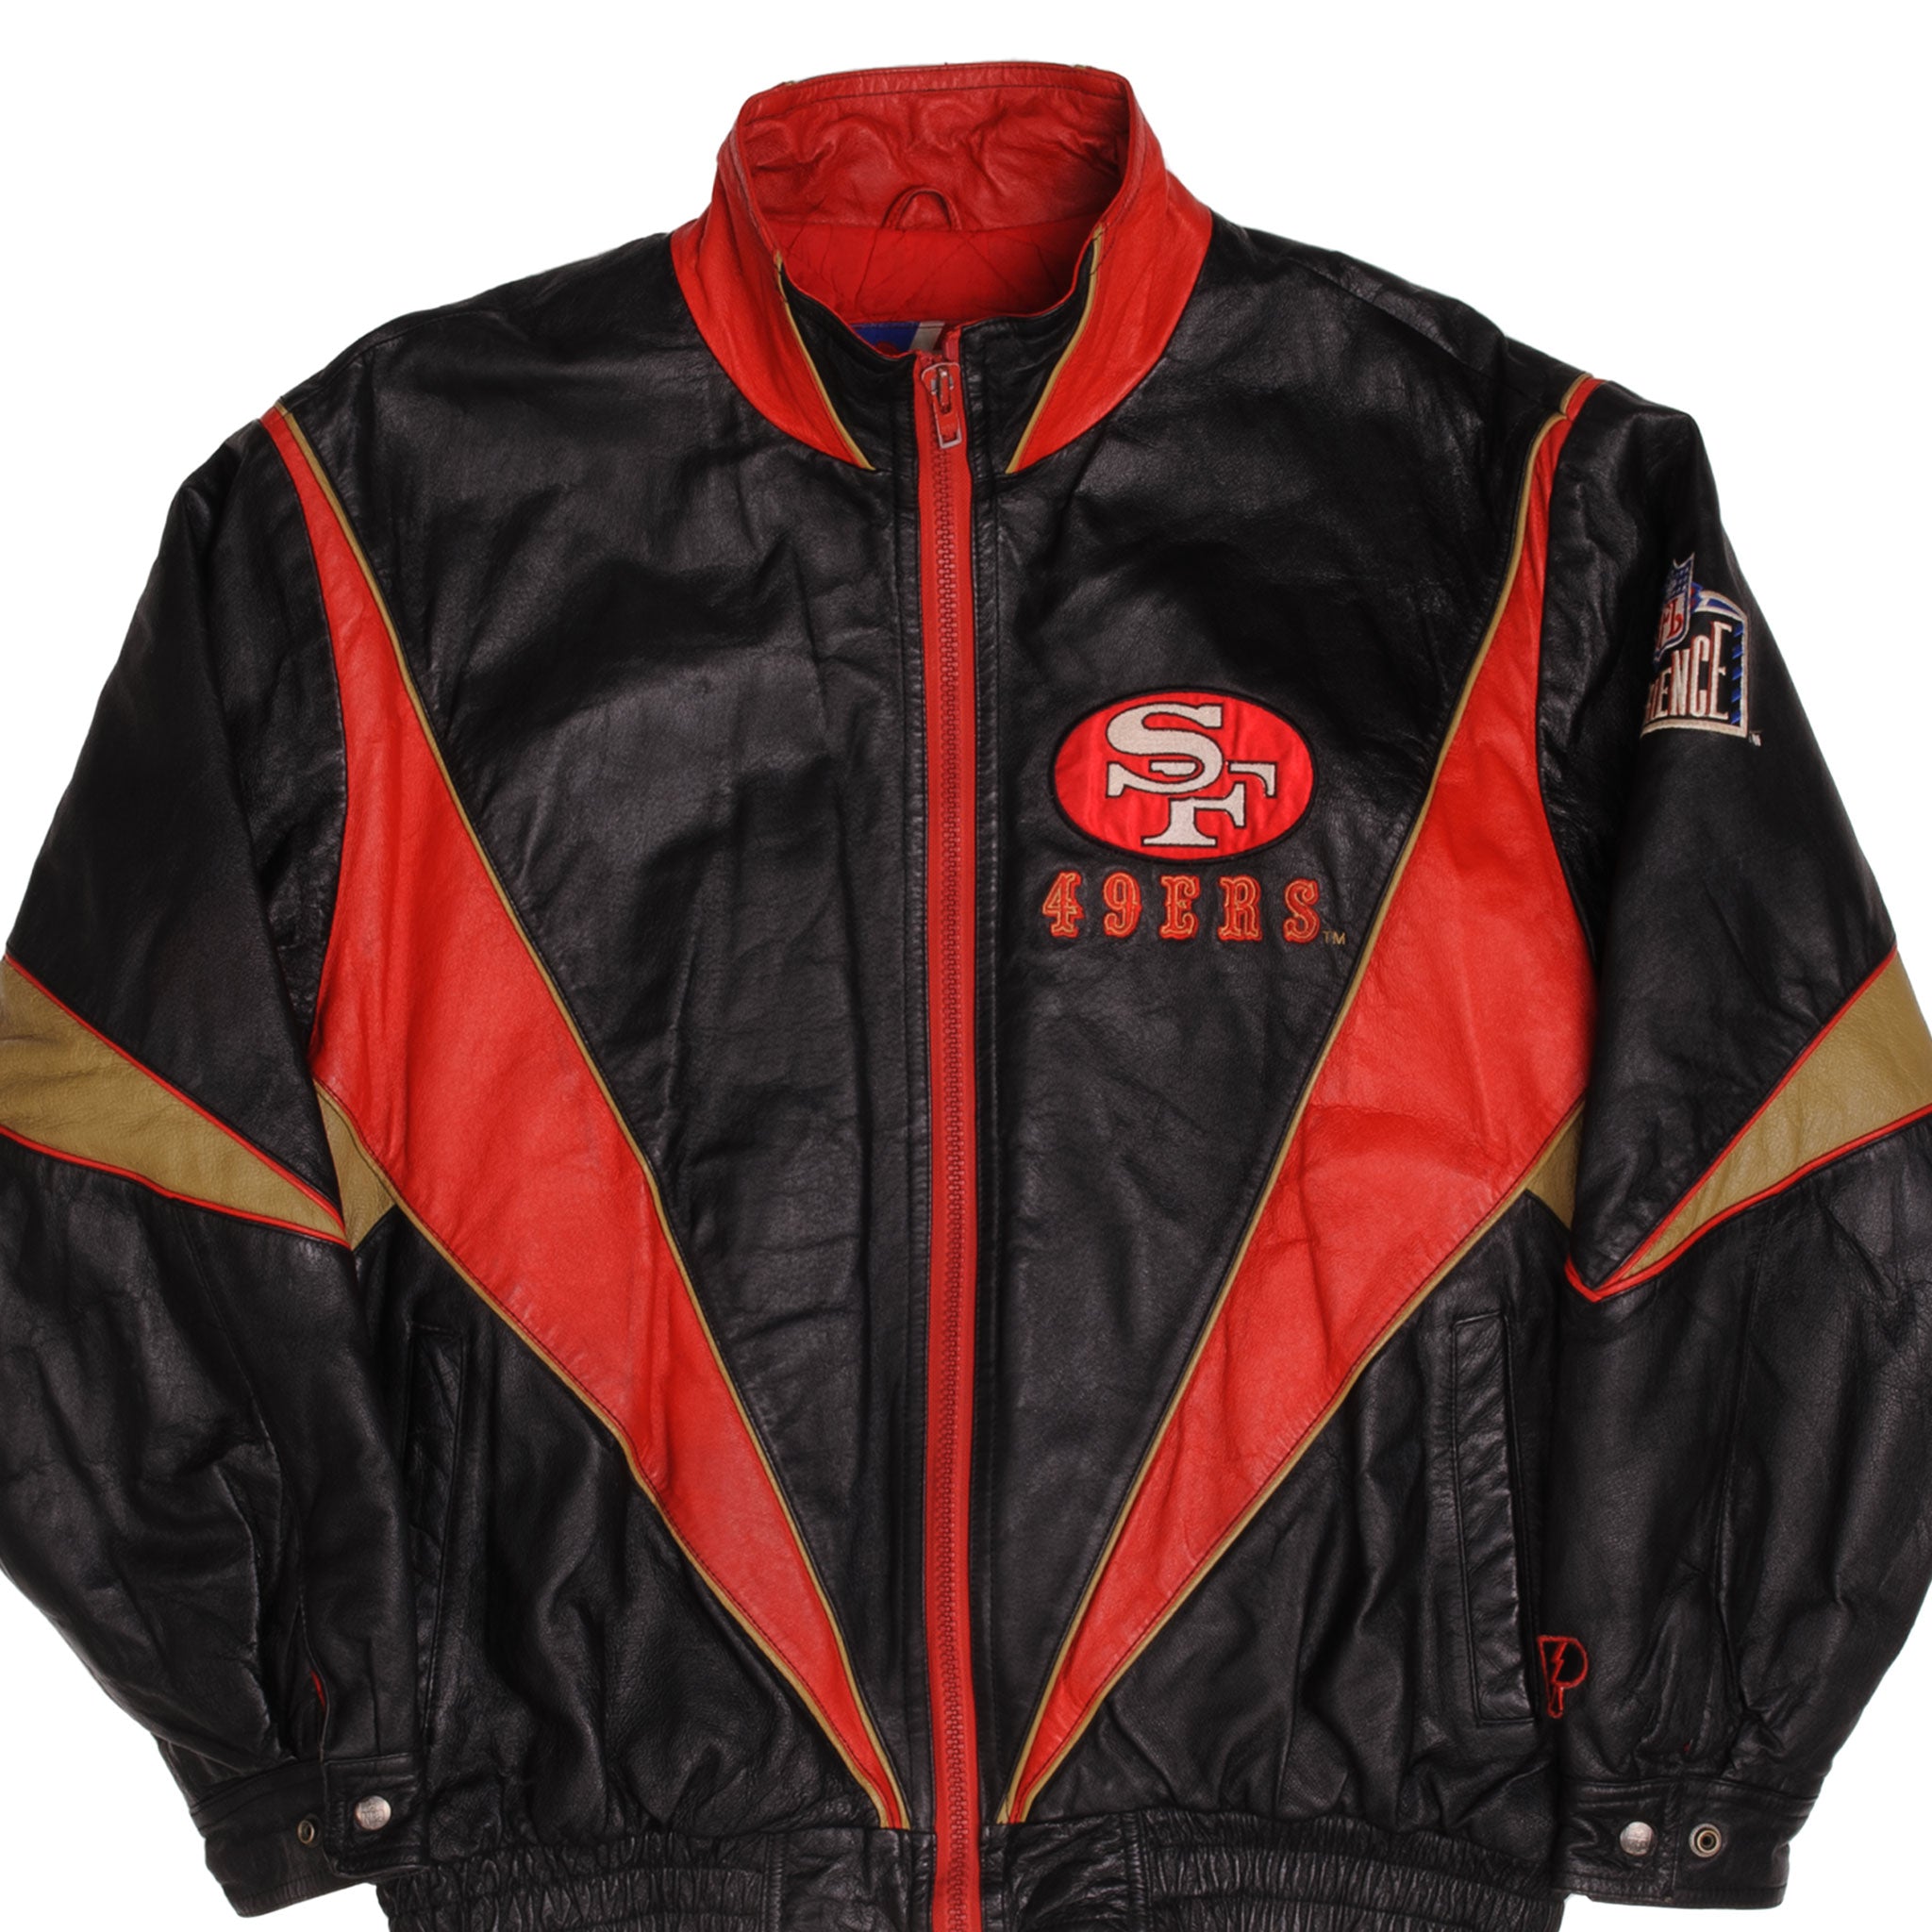 Vintage NFL Experience San Francisco 49ers Leather Jacket Size XL 1990s